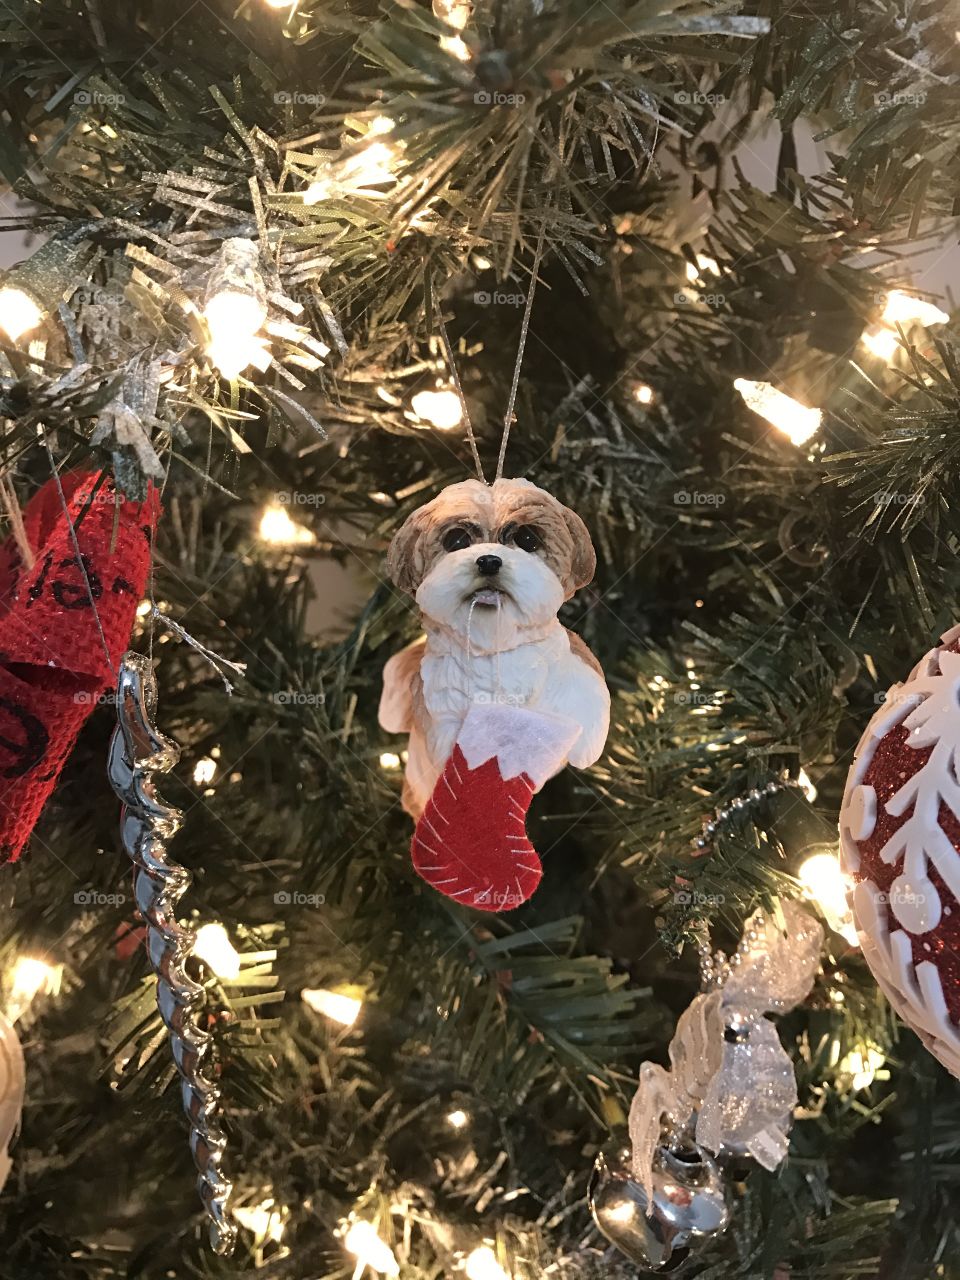 Christmas ornament
